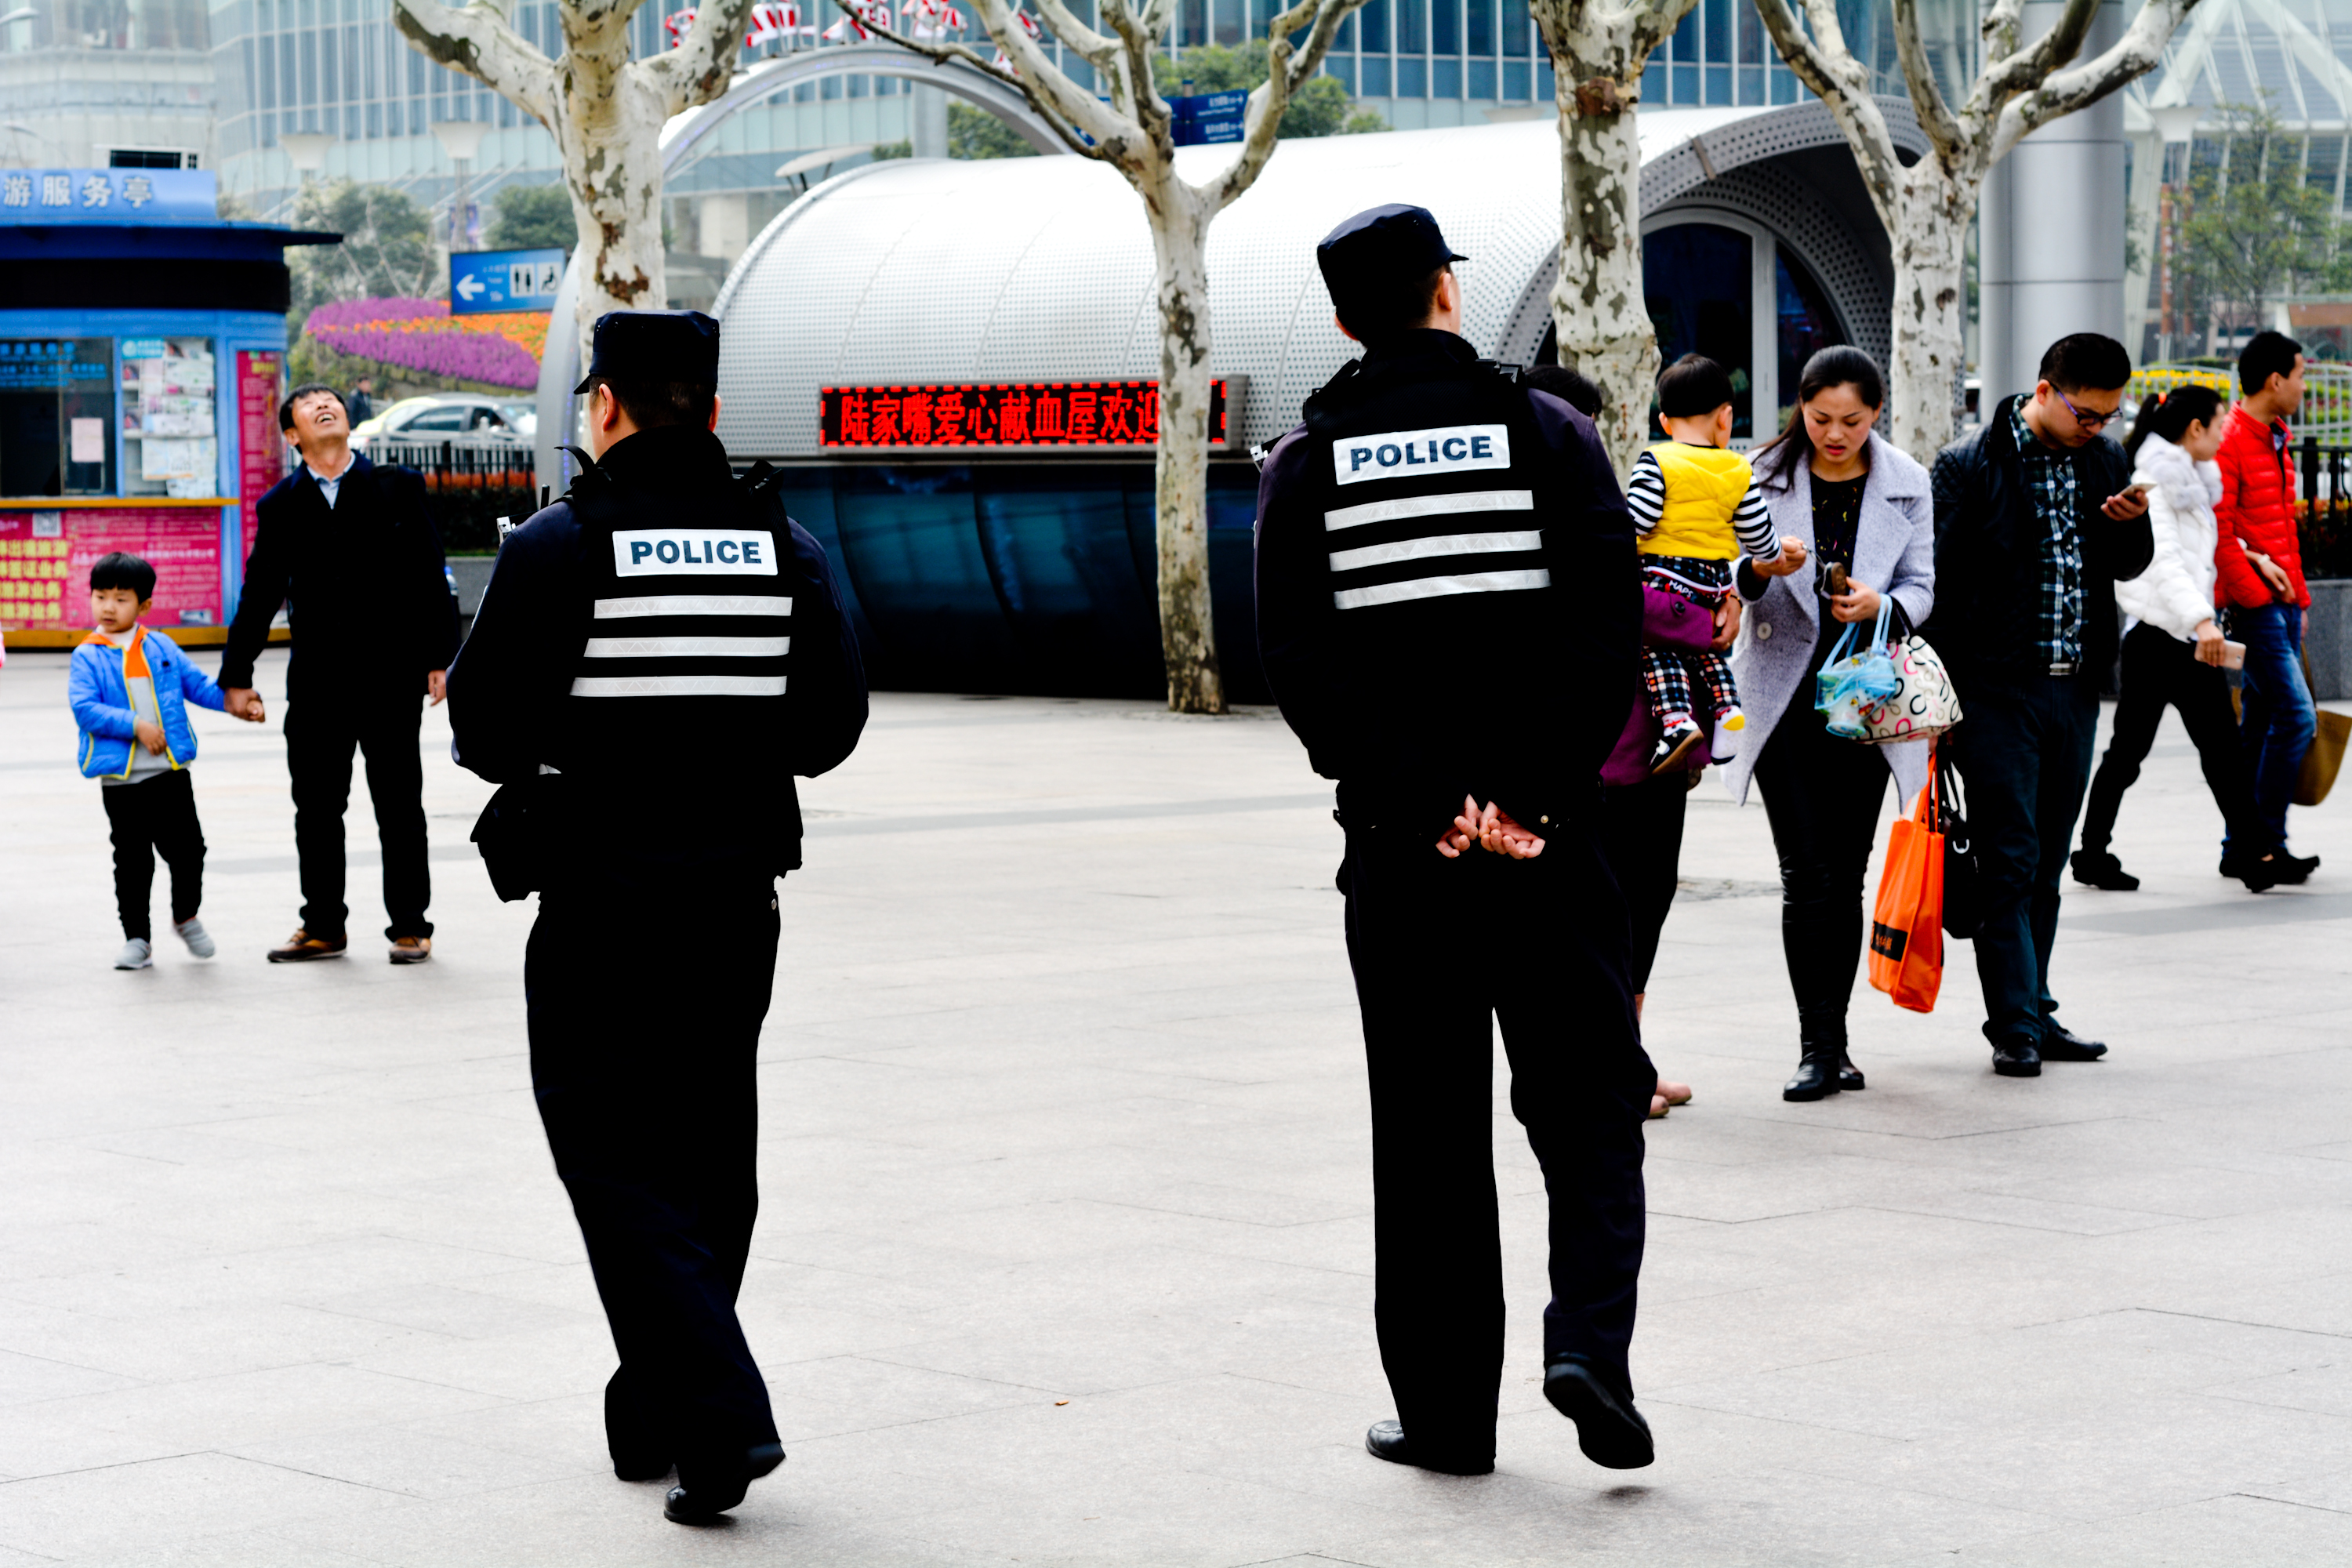 Police in China